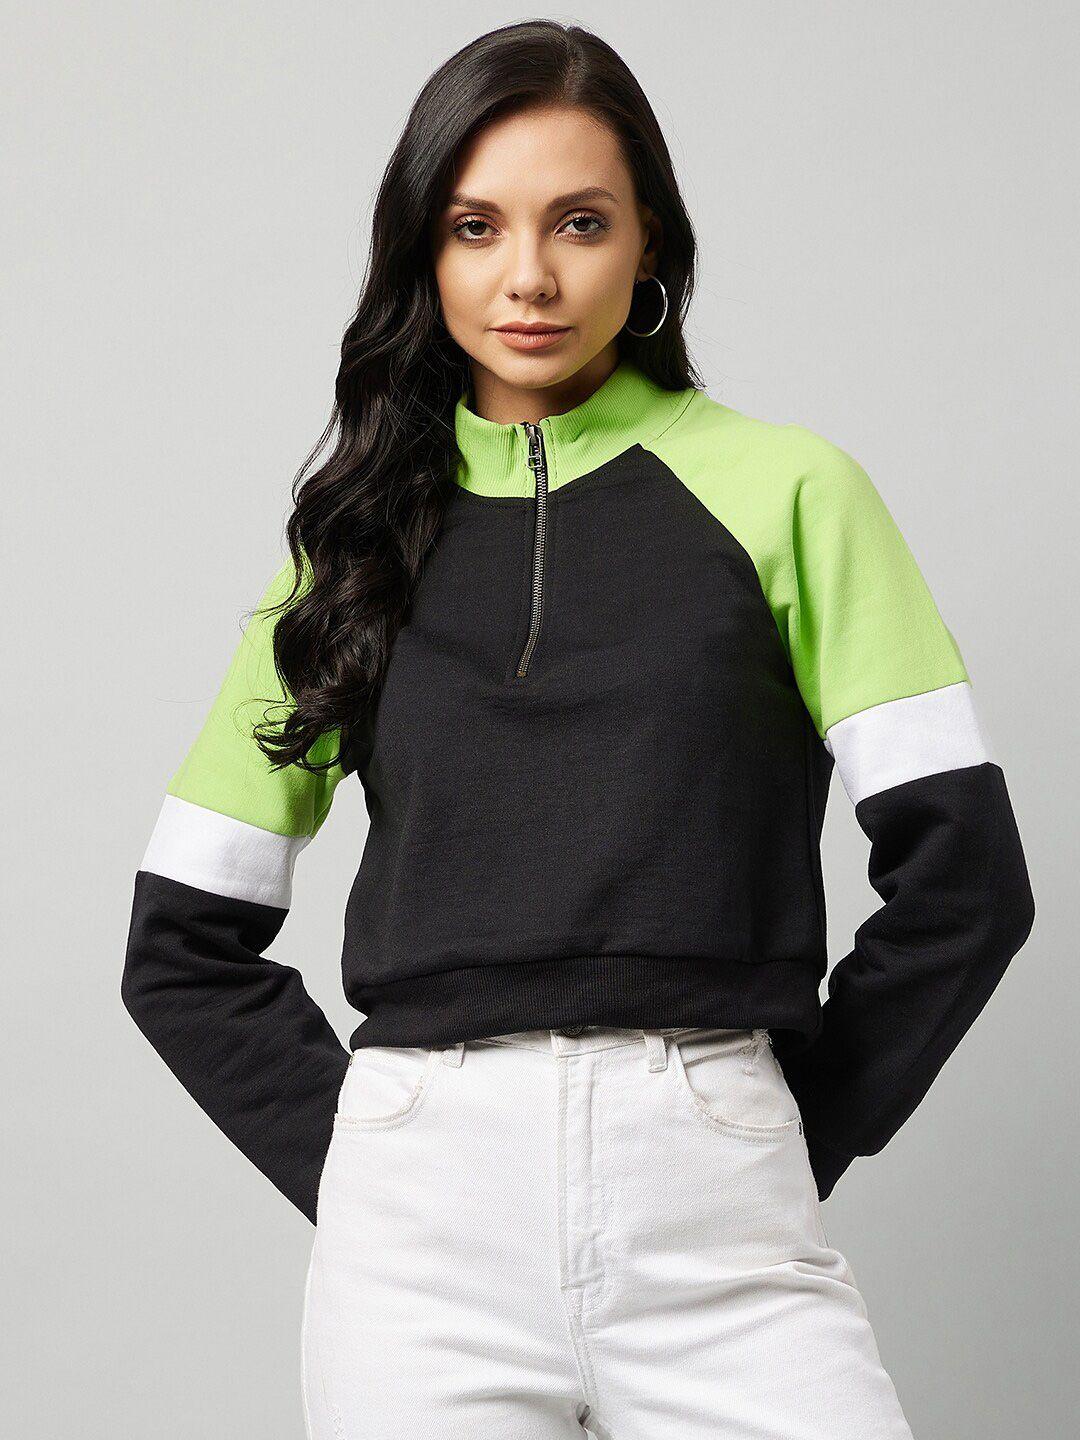 carlton-london-women-black-colourblocked-sweatshirt